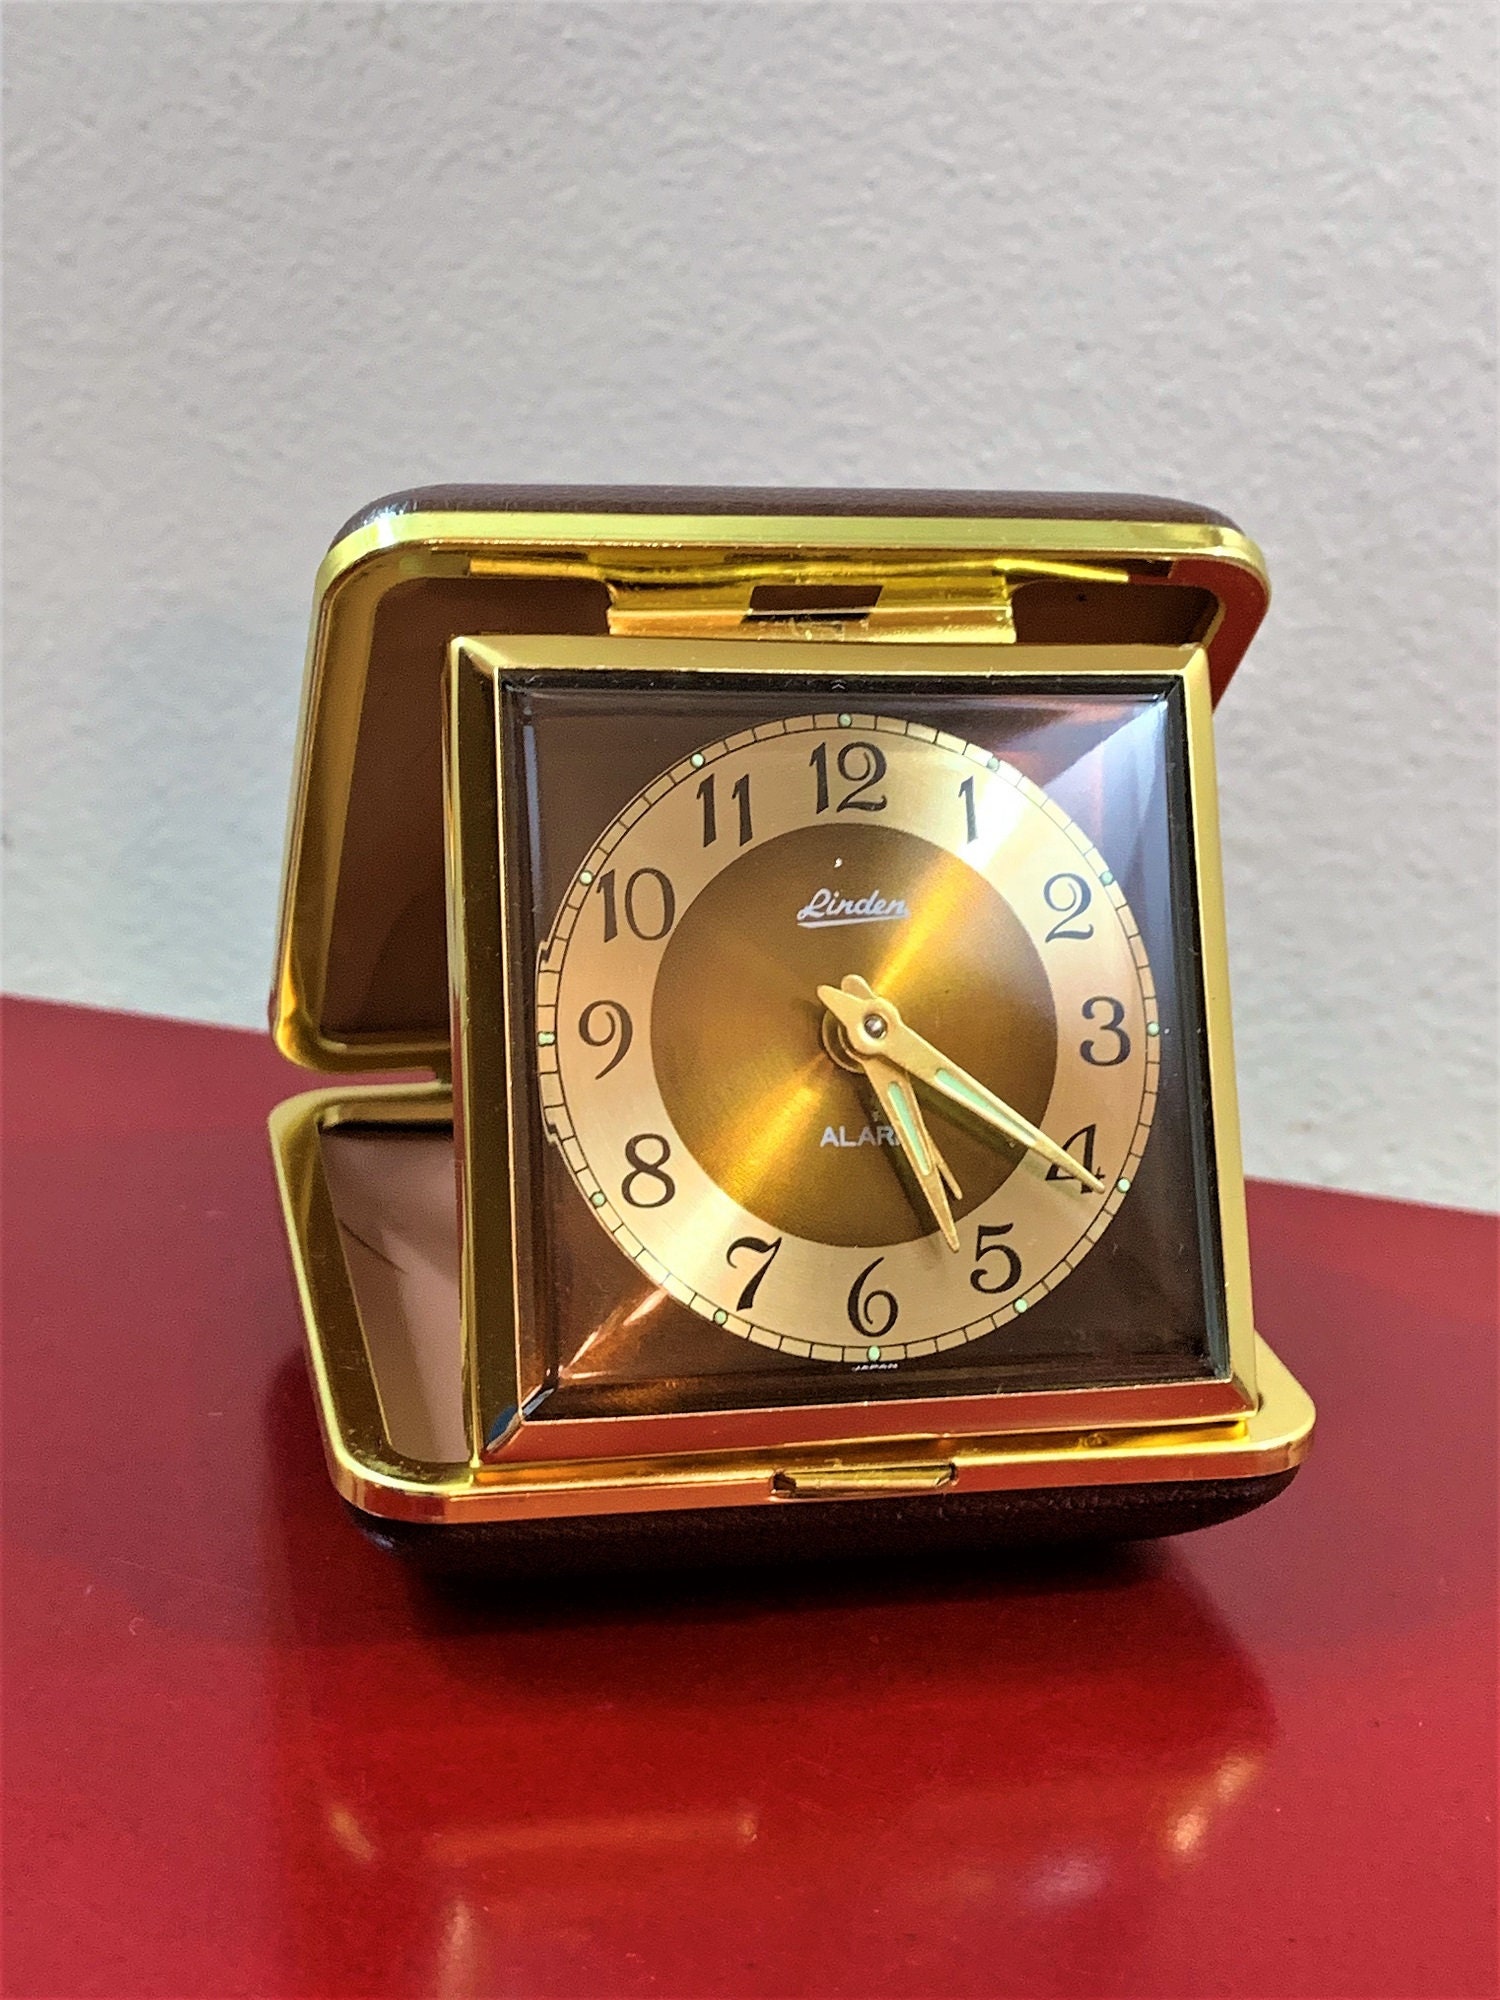 Vintage Mechanical Linden Travel Alarm Clock with Leather Case Made in Korea 